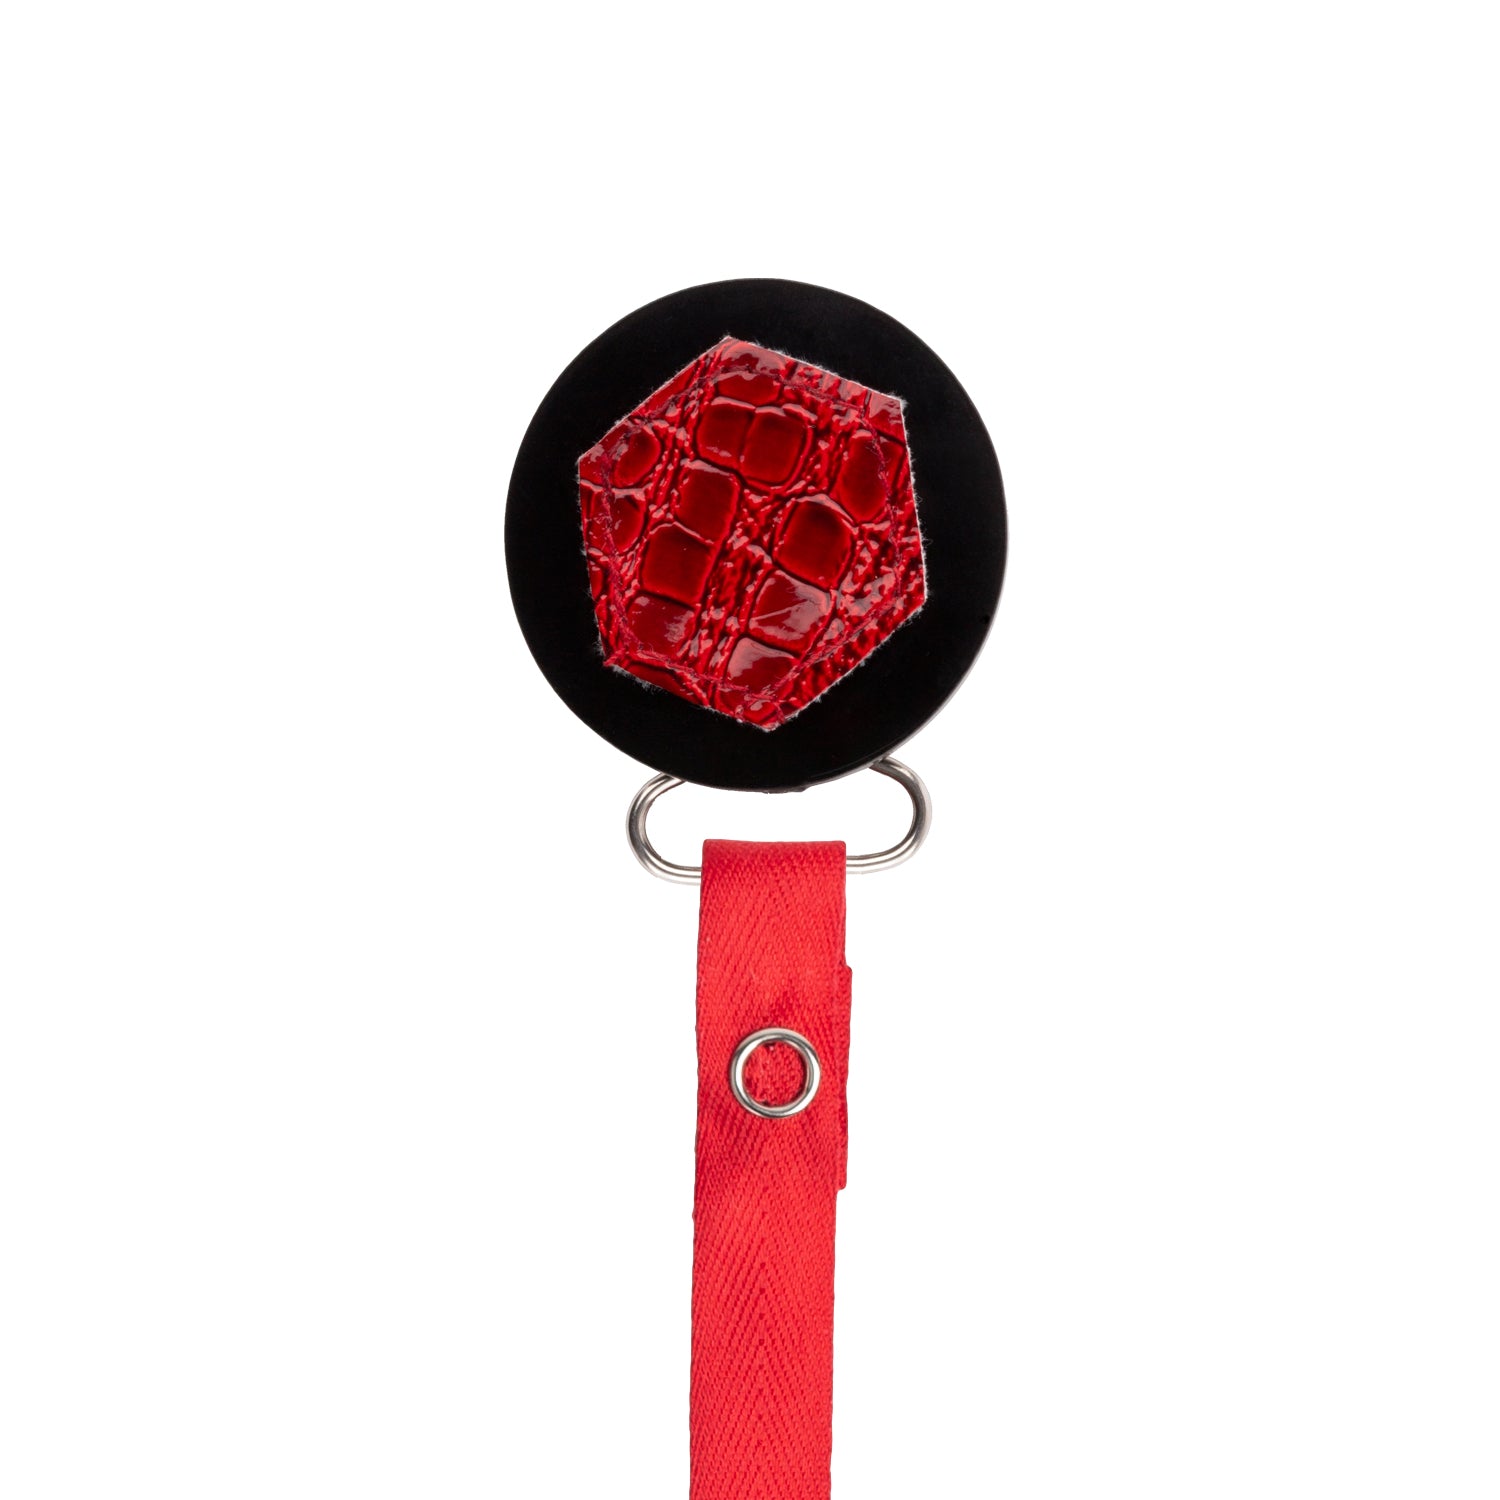 Classy Paci Maroon Croc Hexagon, red, black, burgundy pacifier clip